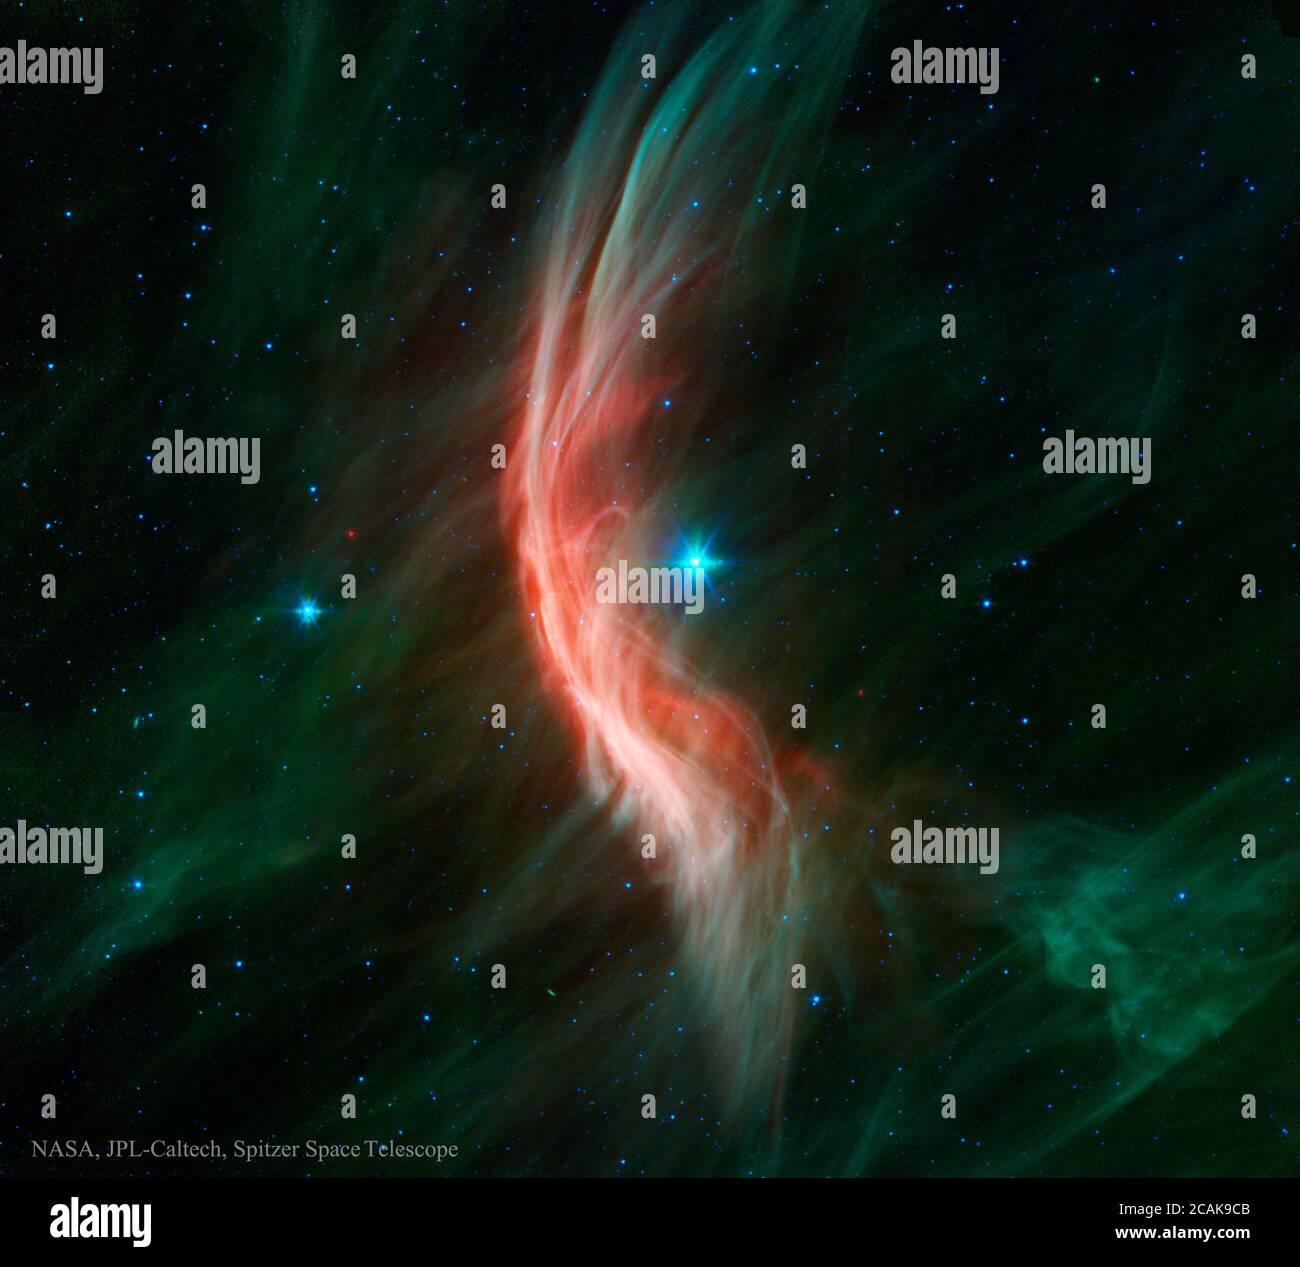 Zeta Oph, Runaway Star Image by NASA, JPL-Caltech, Spitzer Space Telescope Foto Stock